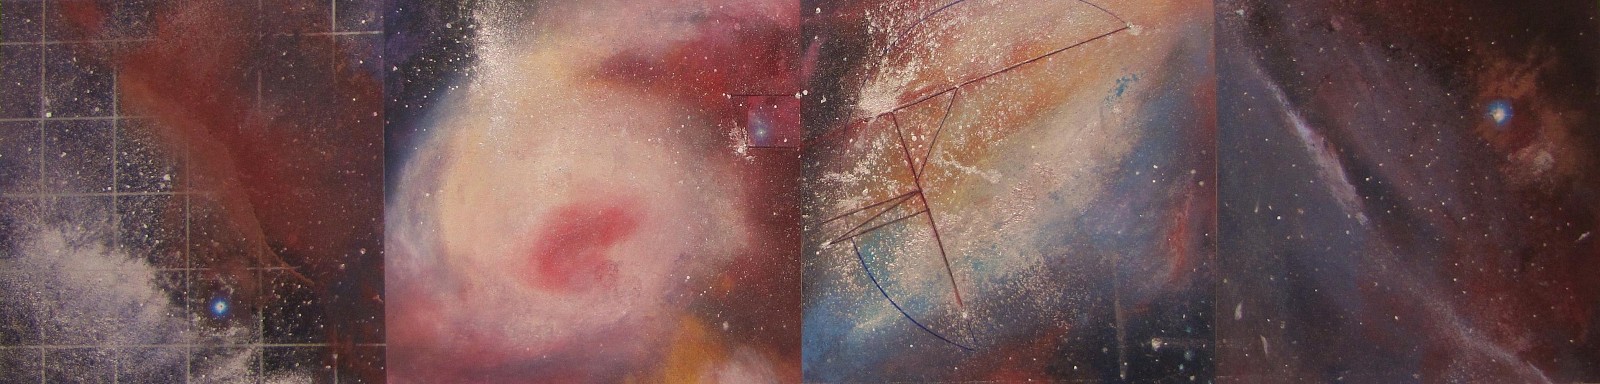 Cynthia Willett
Cone Nebula #2, 2012
mixed media on paper, 7 x 28 in.